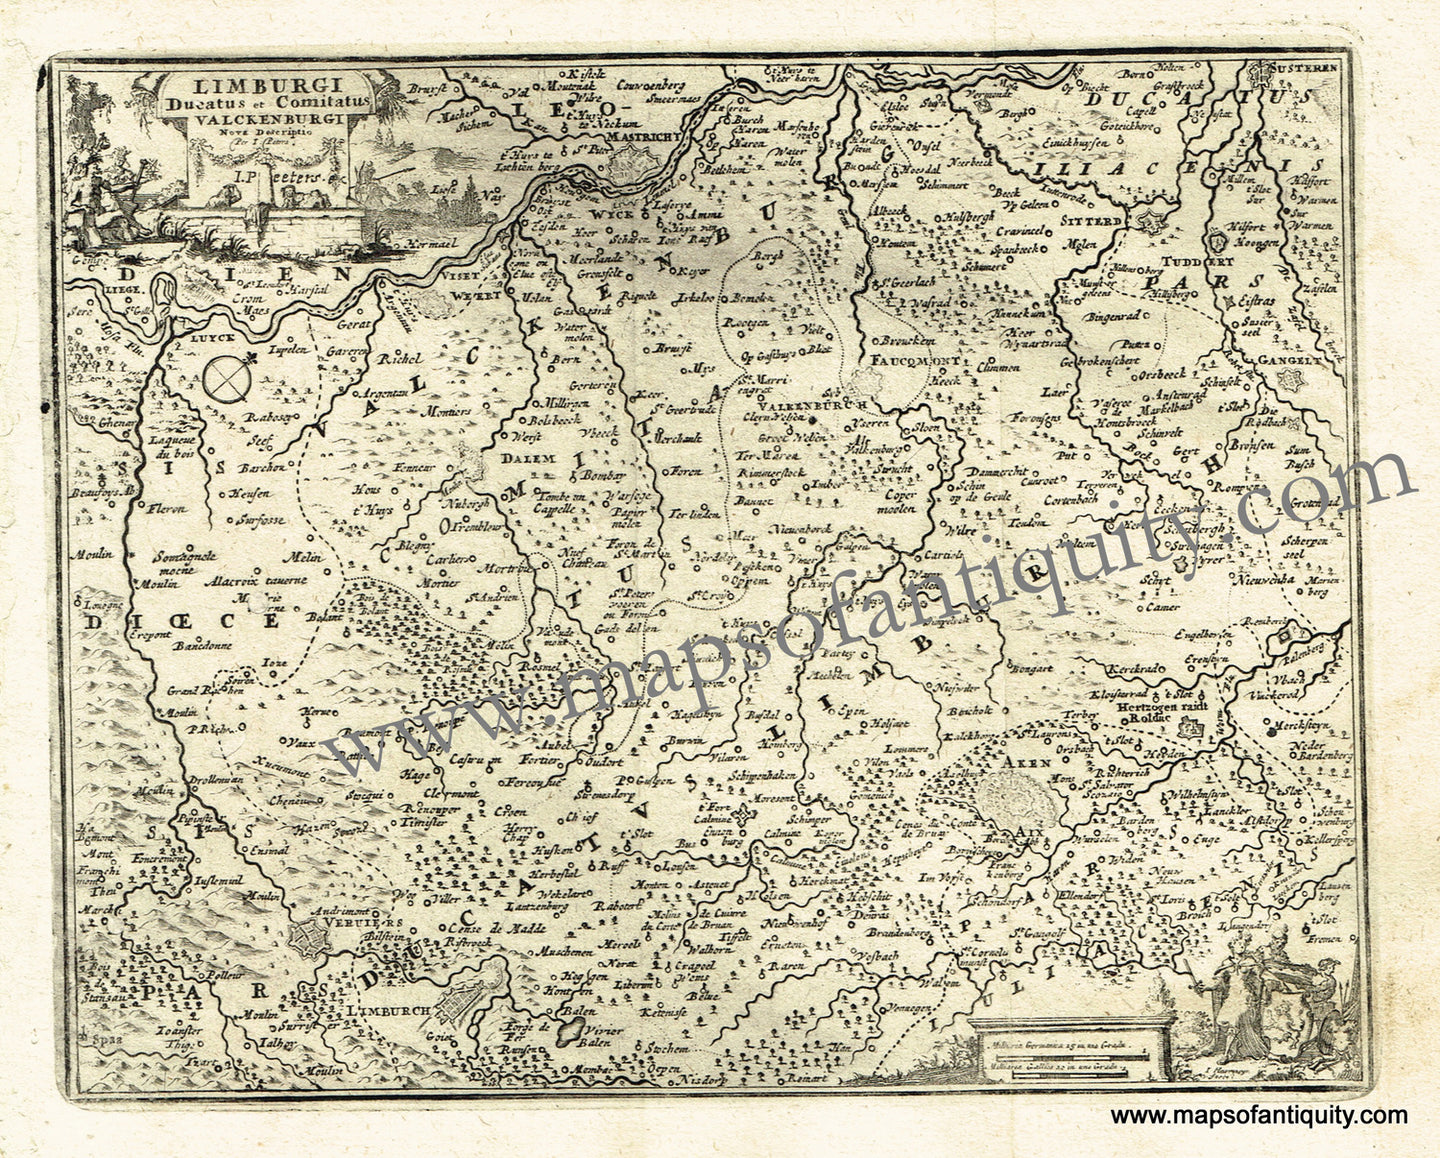 Antique-Black-and-White-Map-Limburgi-Ducatus-et-Comitatus-Valckenburgi-(Parts-of-Belgium-the-Netherlands-and-Germany)-Europe-Netherlands-1725-De-Aefferden-Maps-Of-Antiquity